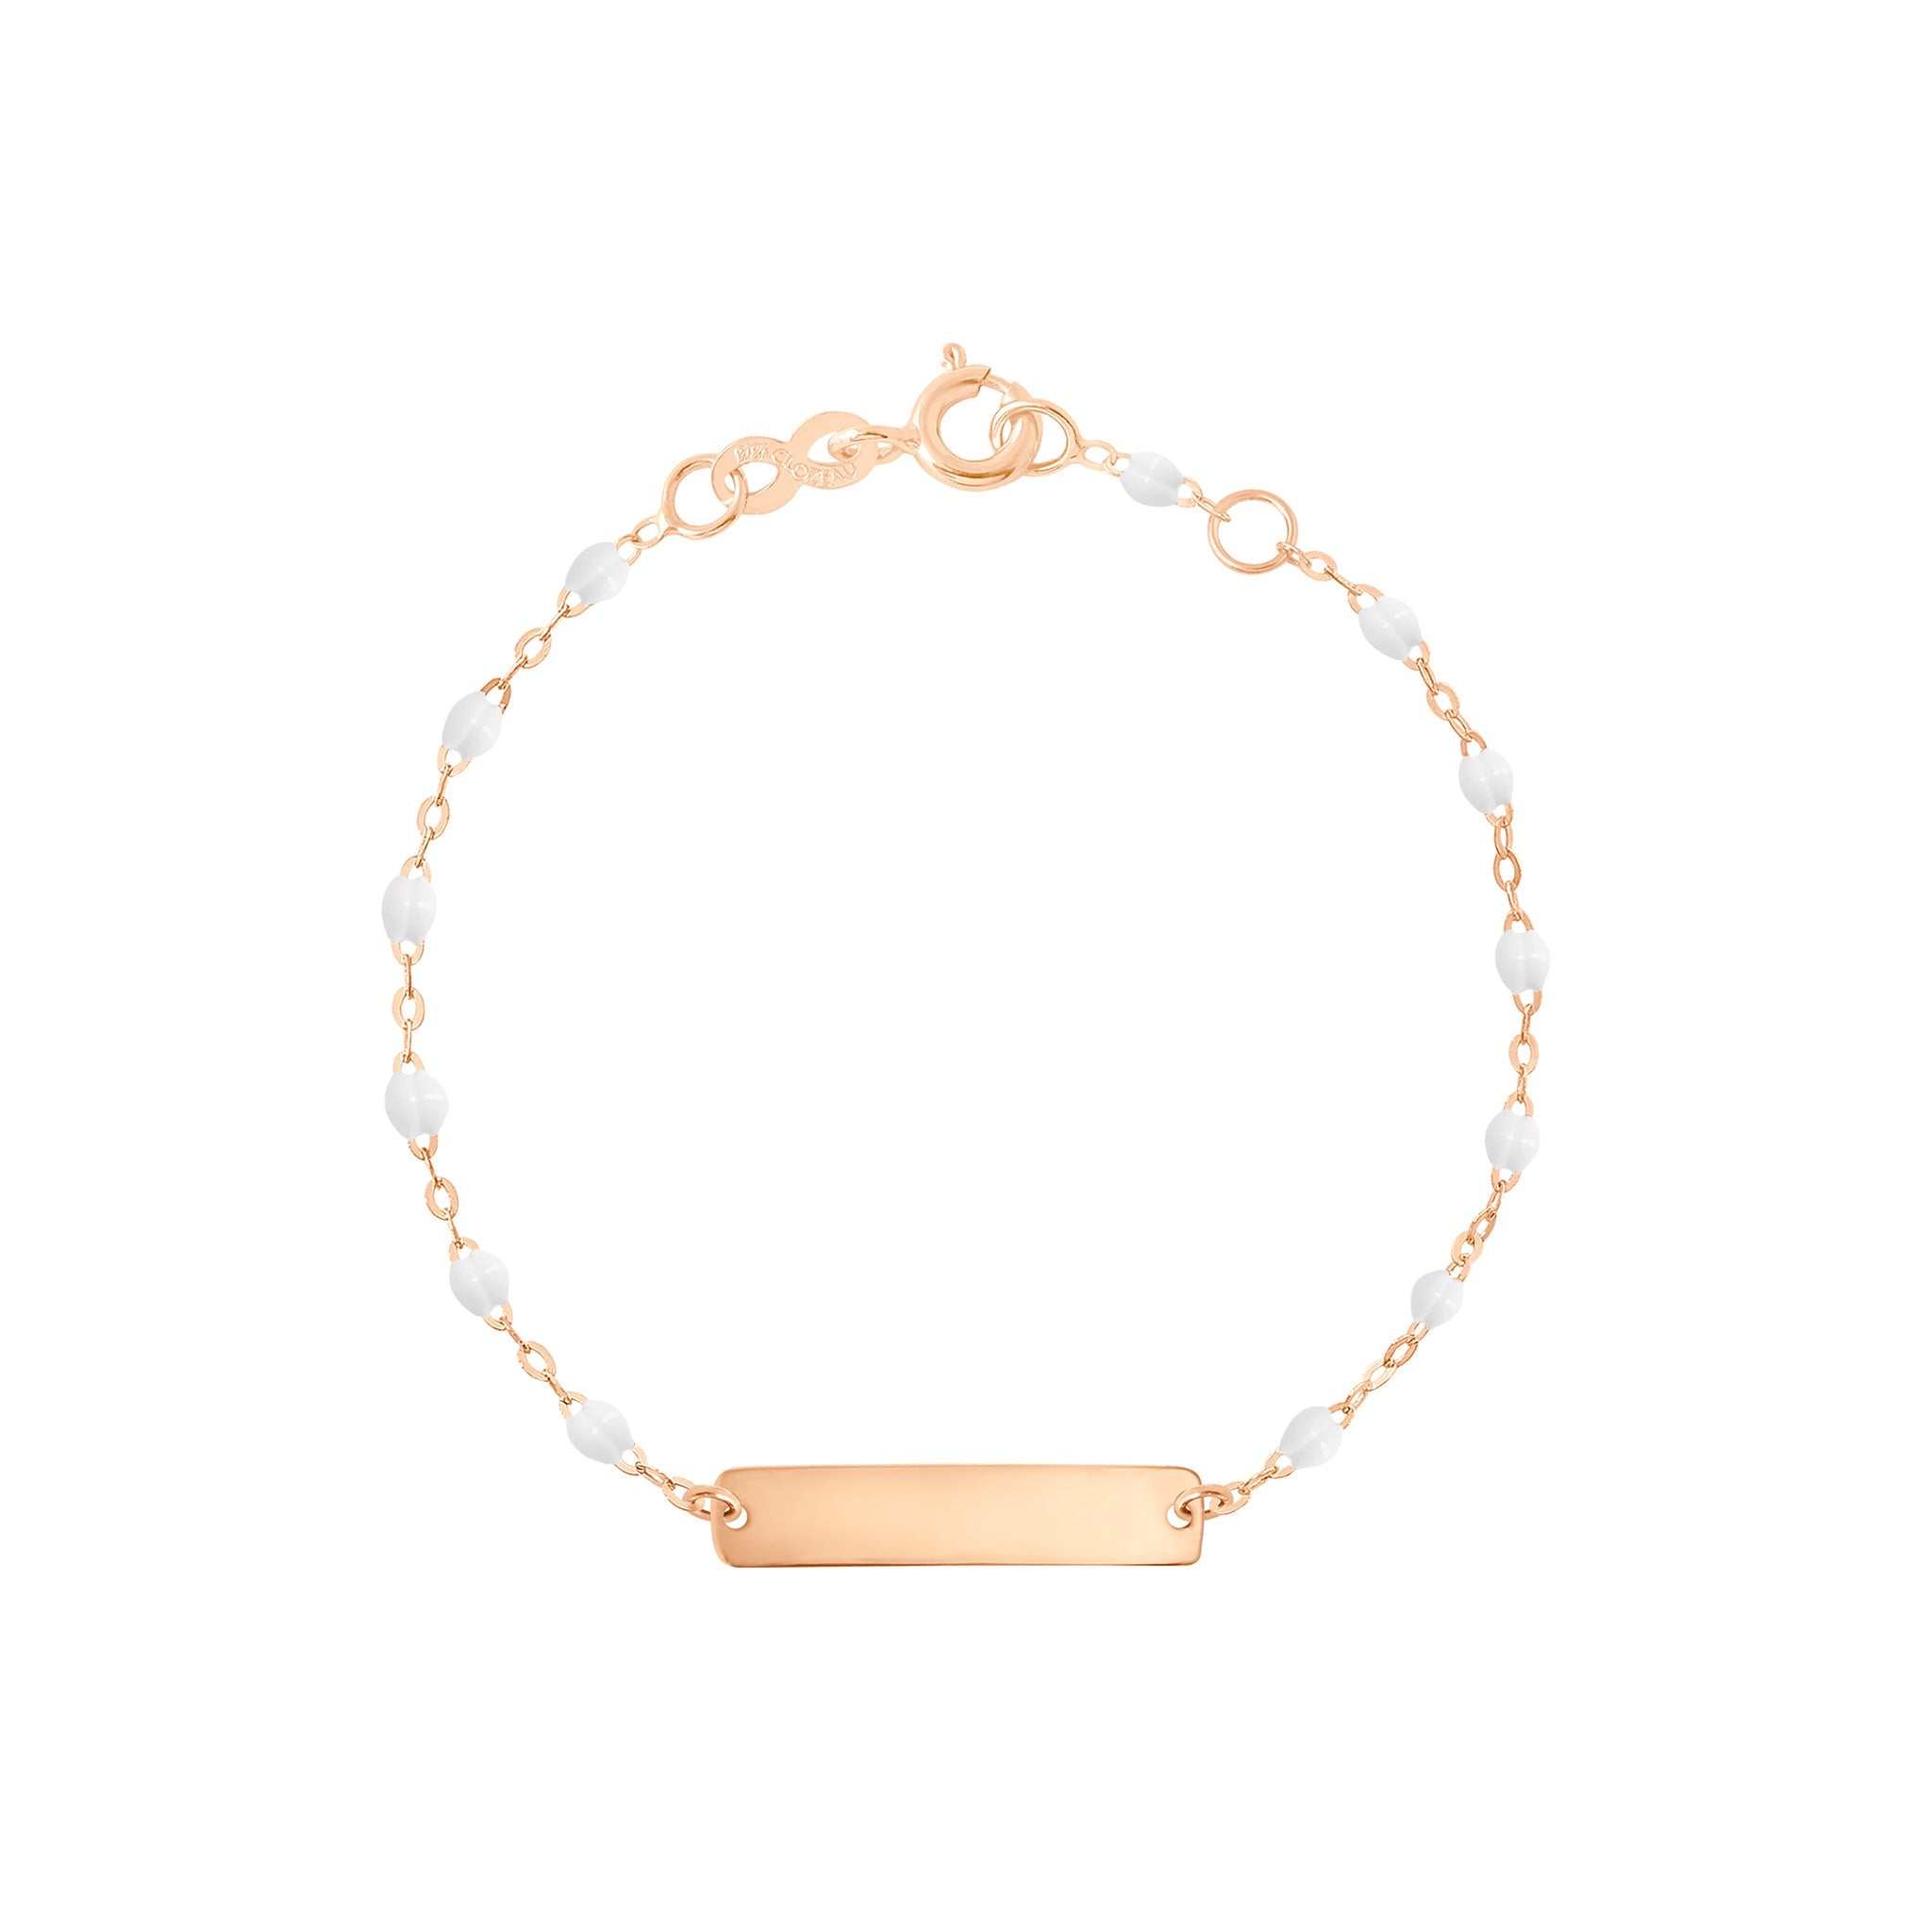 Bracelet blanc Little Gigi, plaque rectangle, or rose, 15 cm little gigi Référence :  b3lg001r0115xx -1